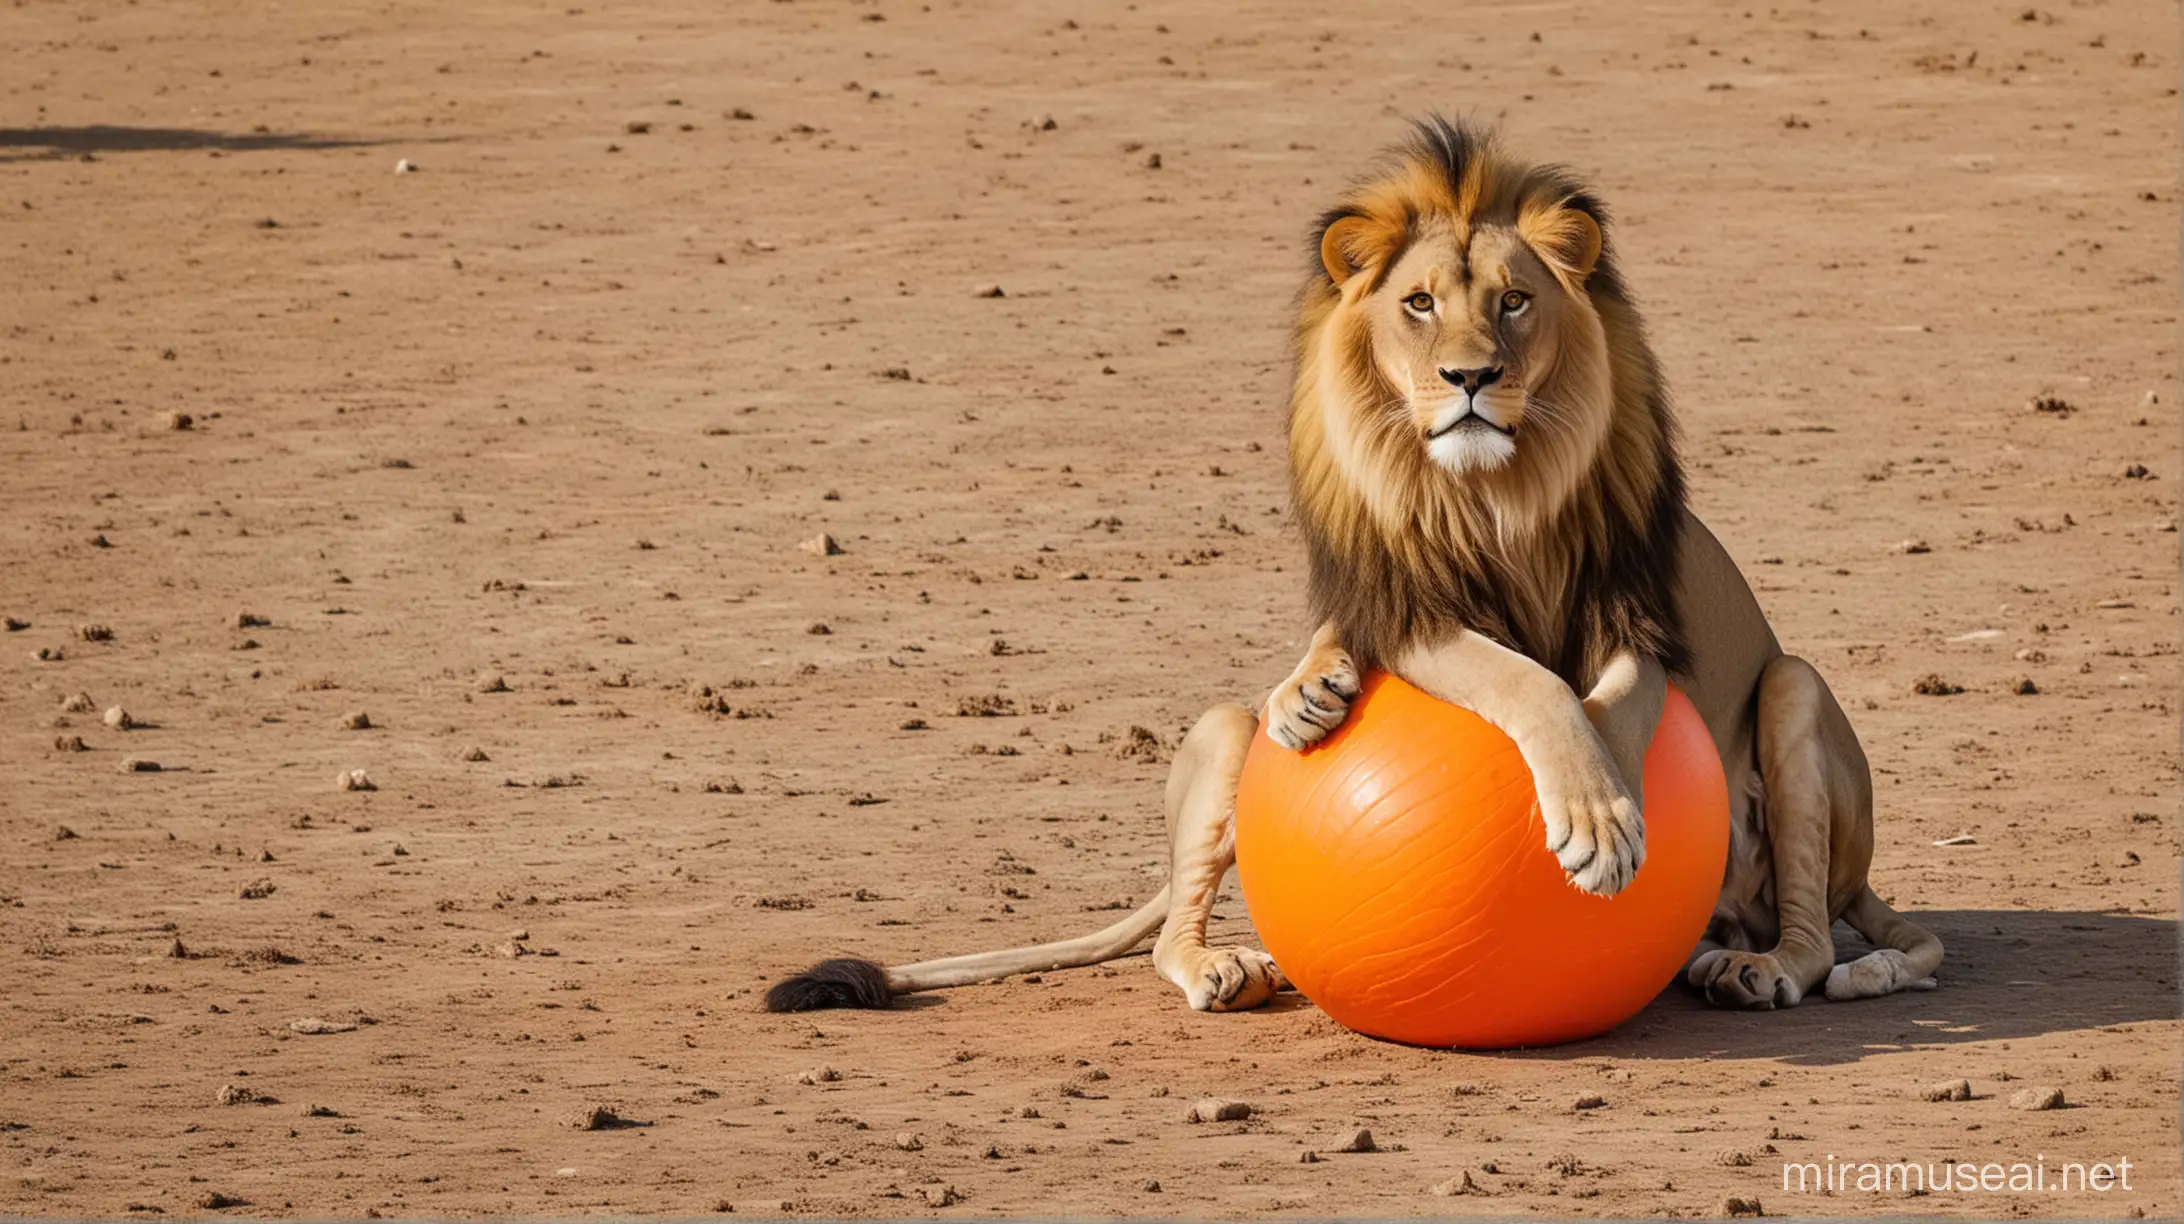 Majestic Lion Perched on Vibrant Orange Ball